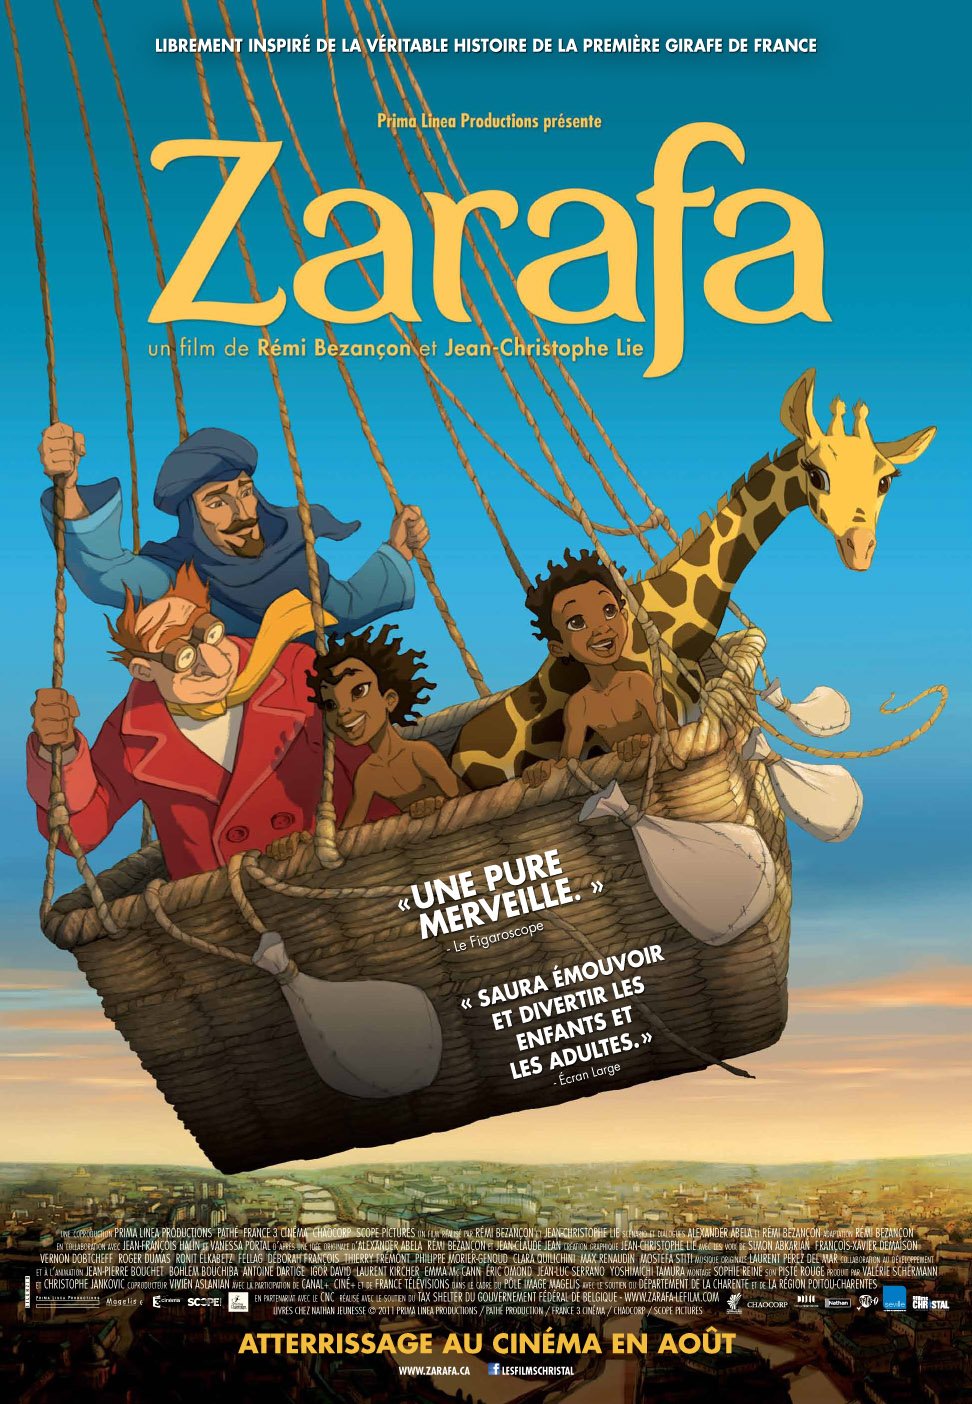 Poster of the movie Zarafa